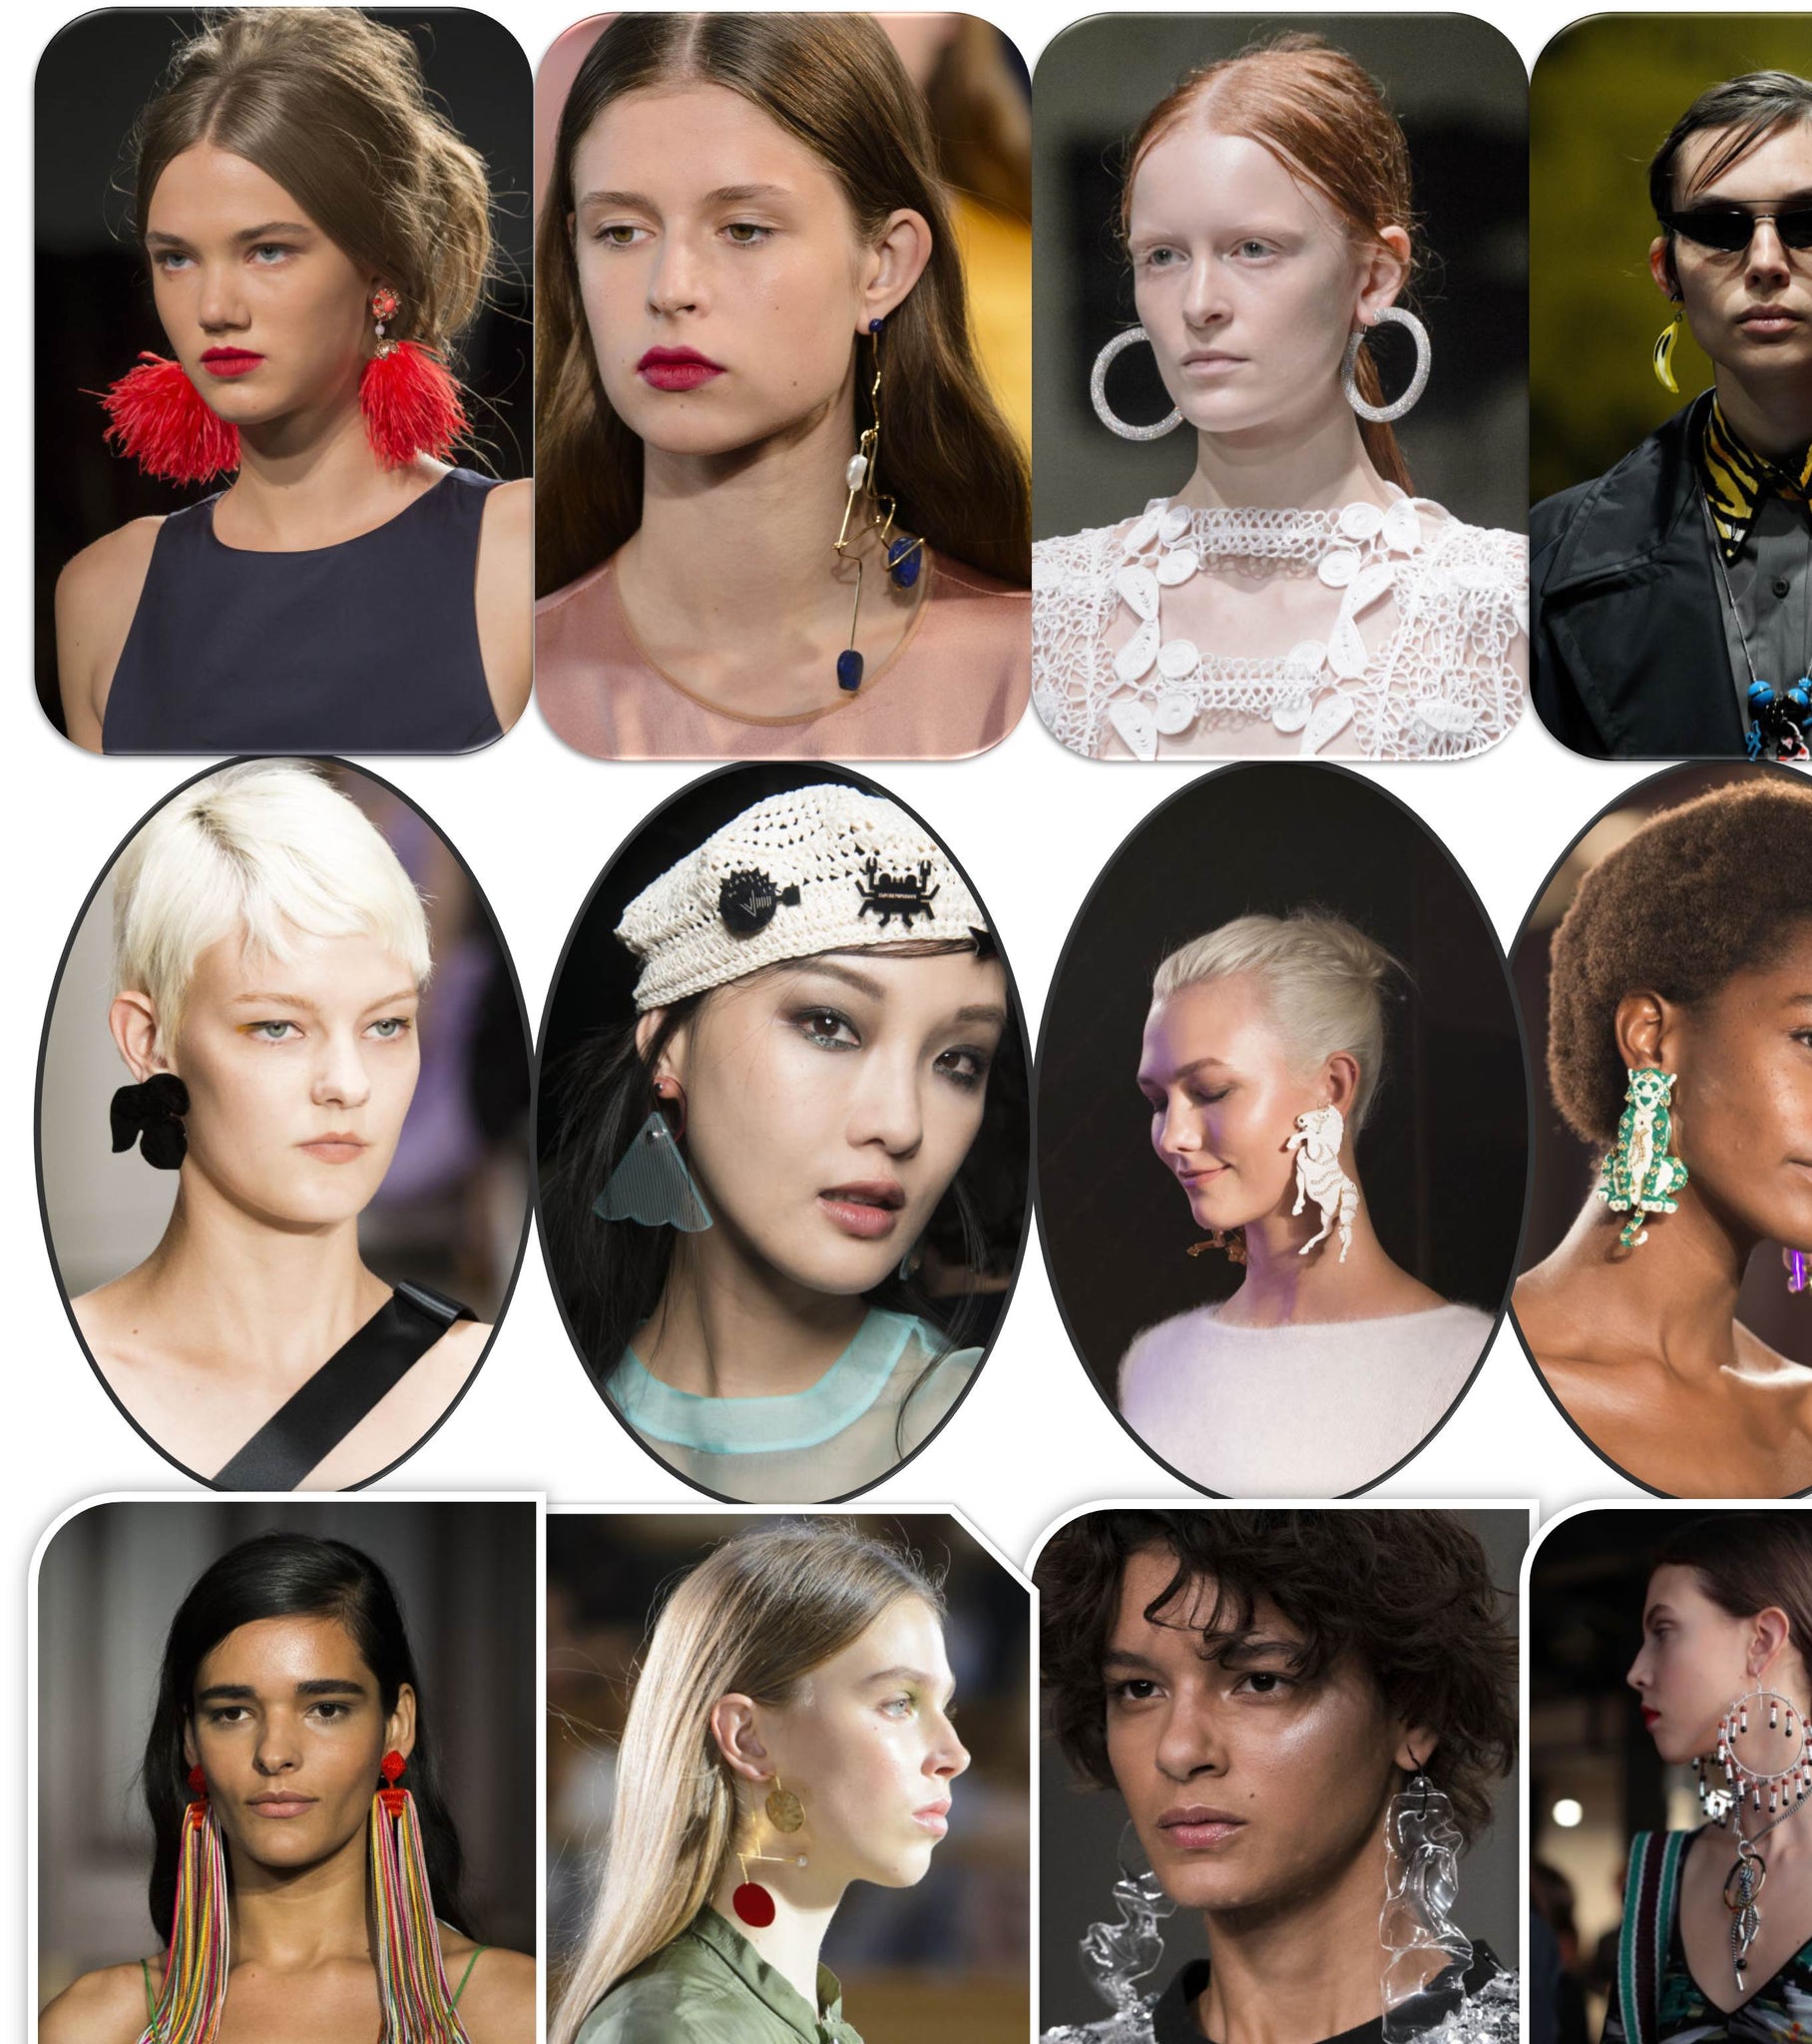 Milan Fashion Week Spring 2018 Earrings Fashion Trends in 2018